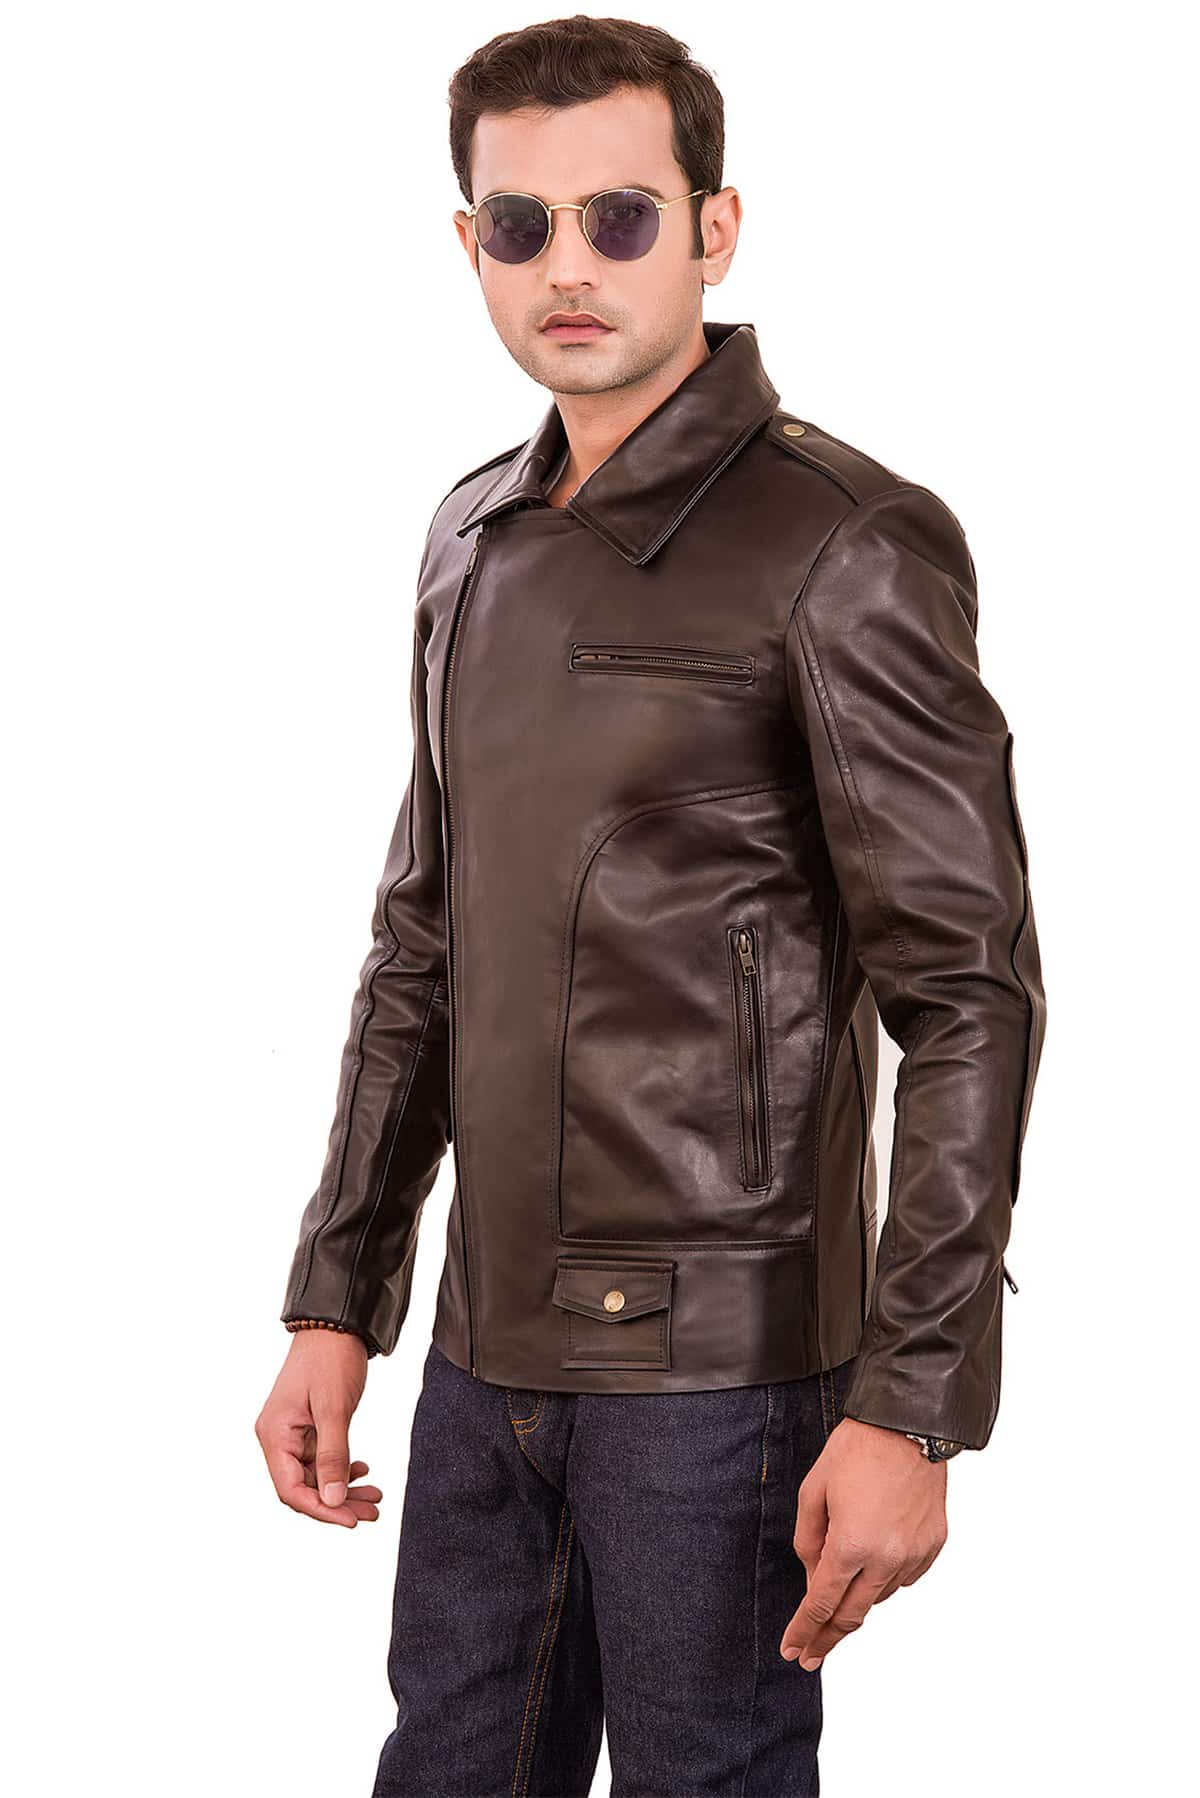 genuine leather jacket malaysia